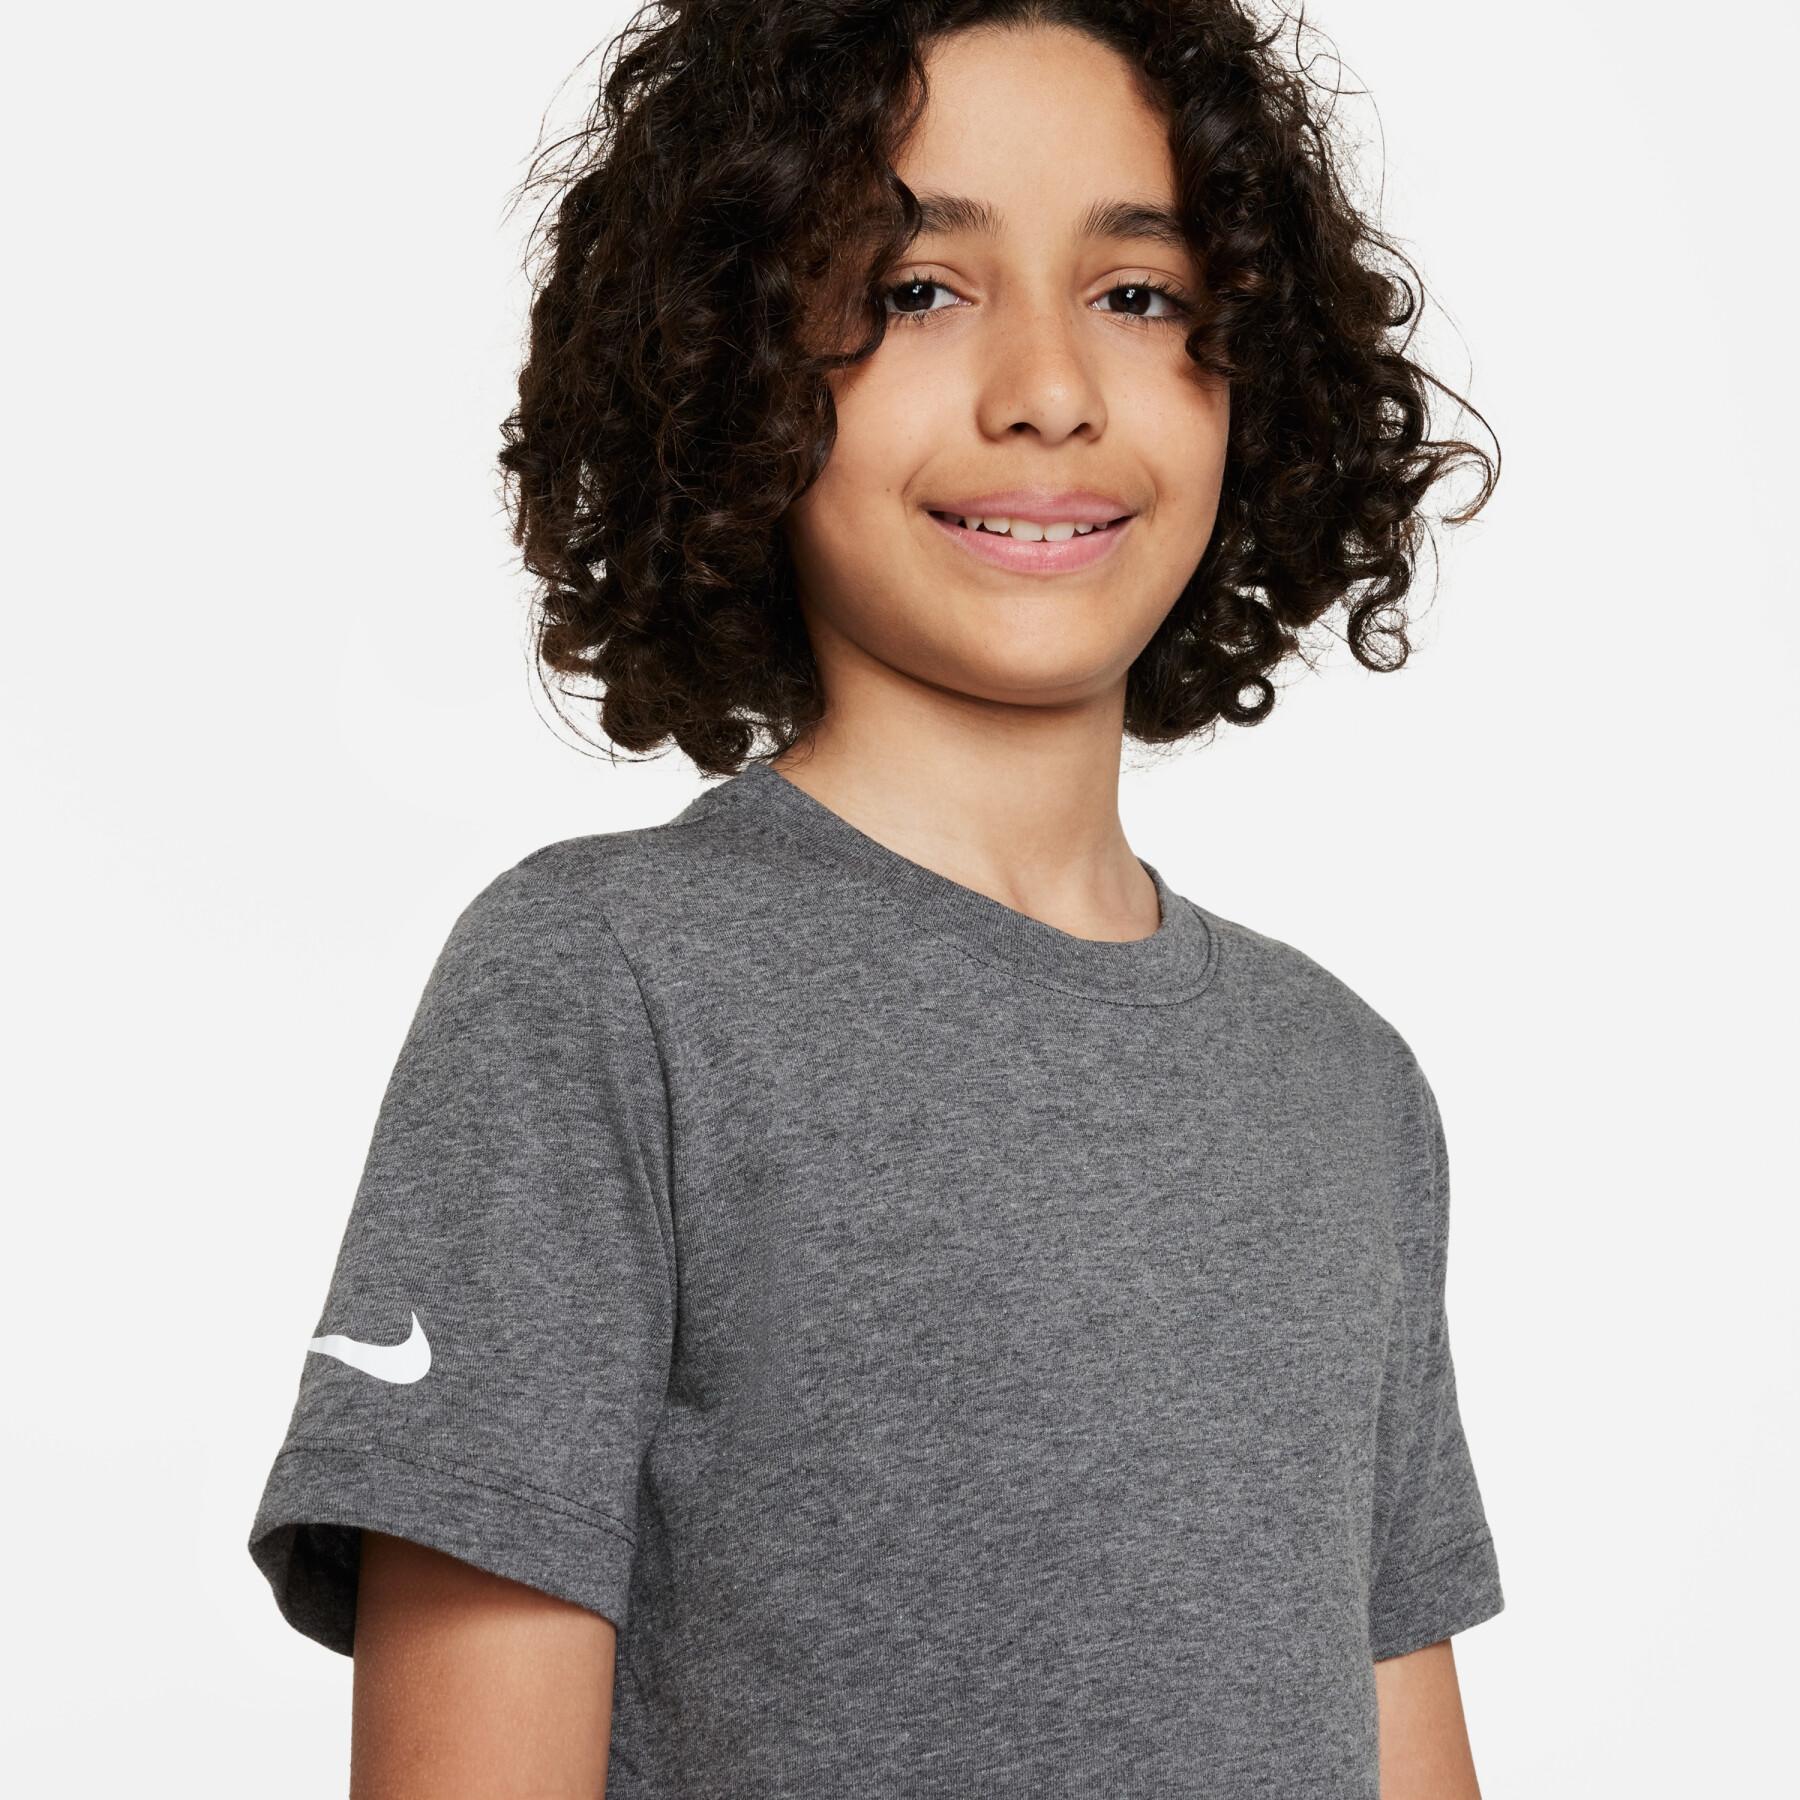 Child's T-shirt Nike Park20